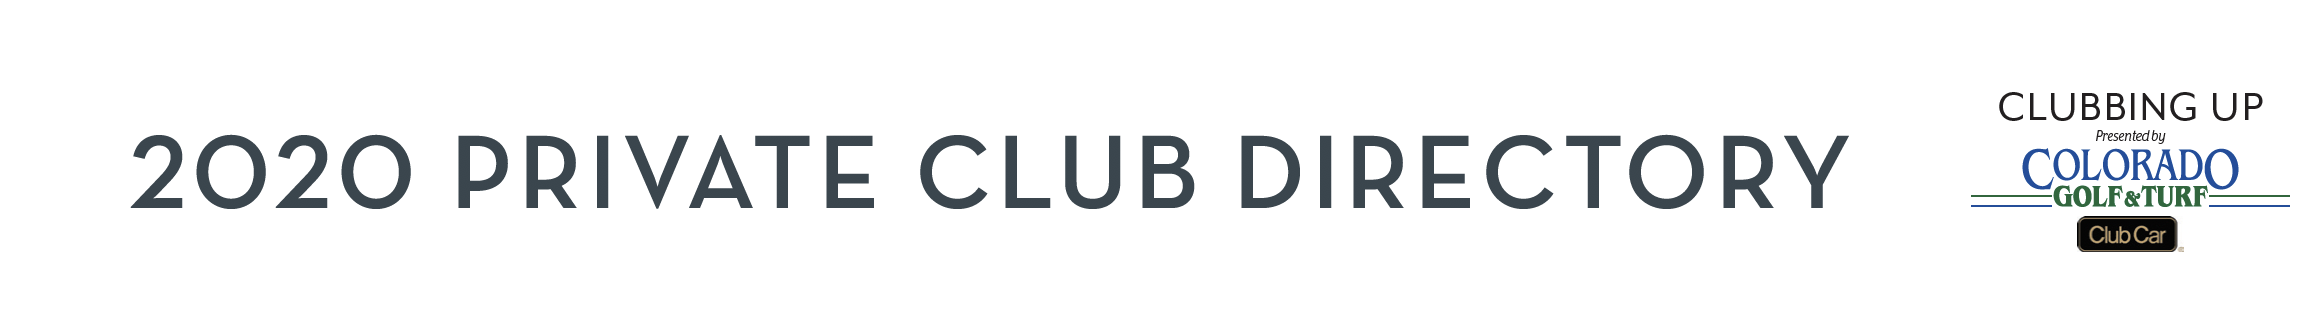 2020 Private Club Directory